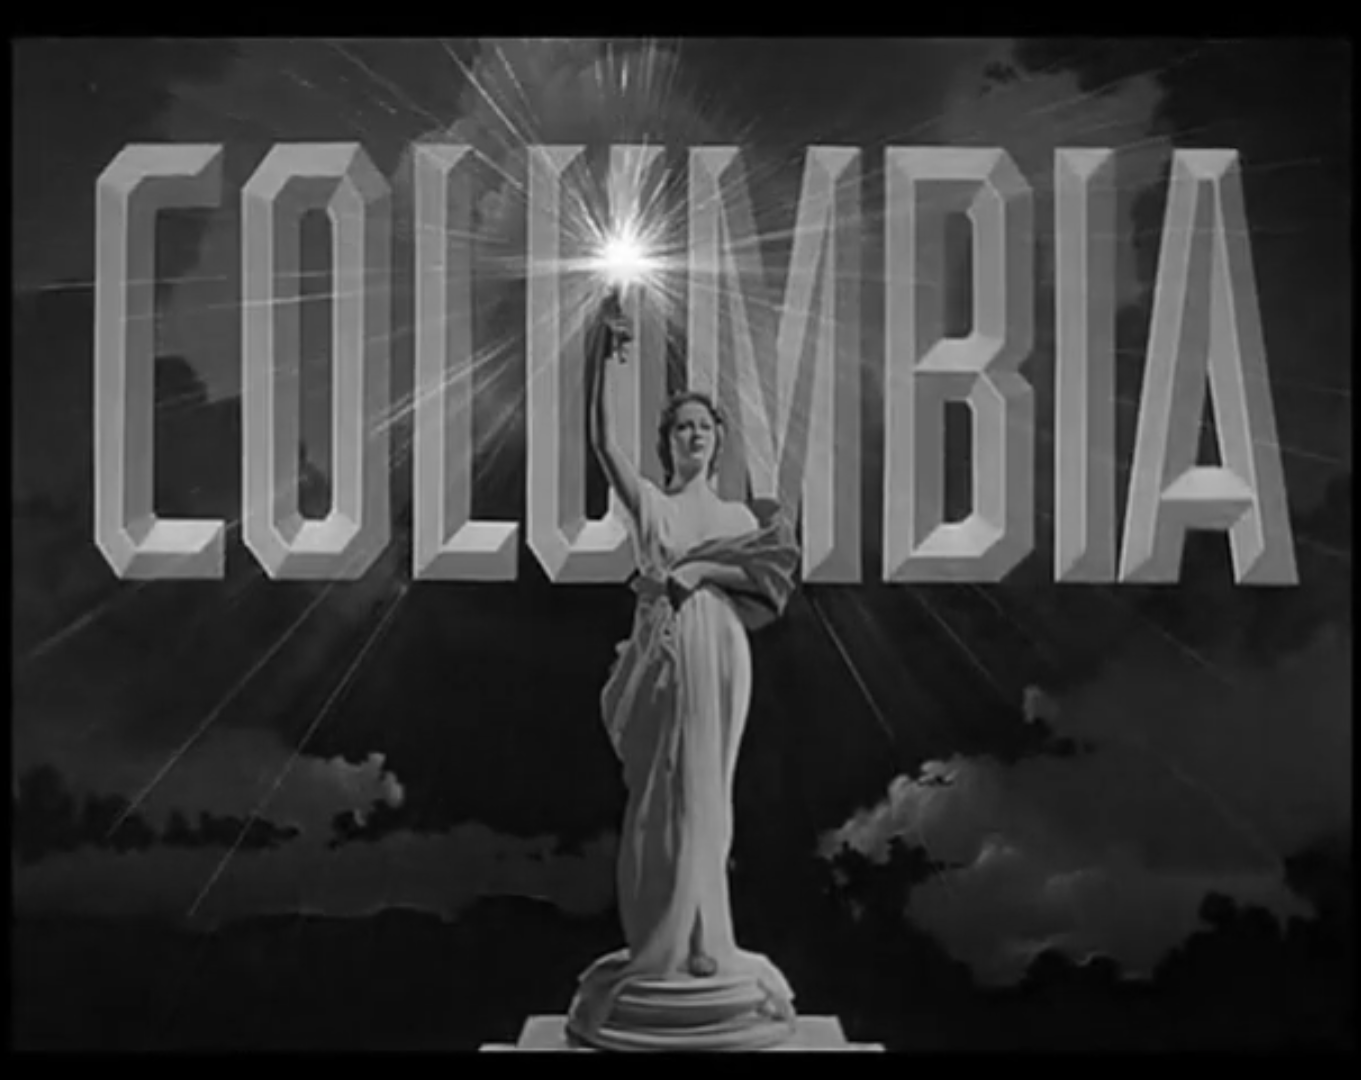 Заставка пикчерс. Кинокомпания коламбия Пикчерз. Columbia pictures 1924. Коламбия киностудия. Логотип компании коламбия Пикчерз.